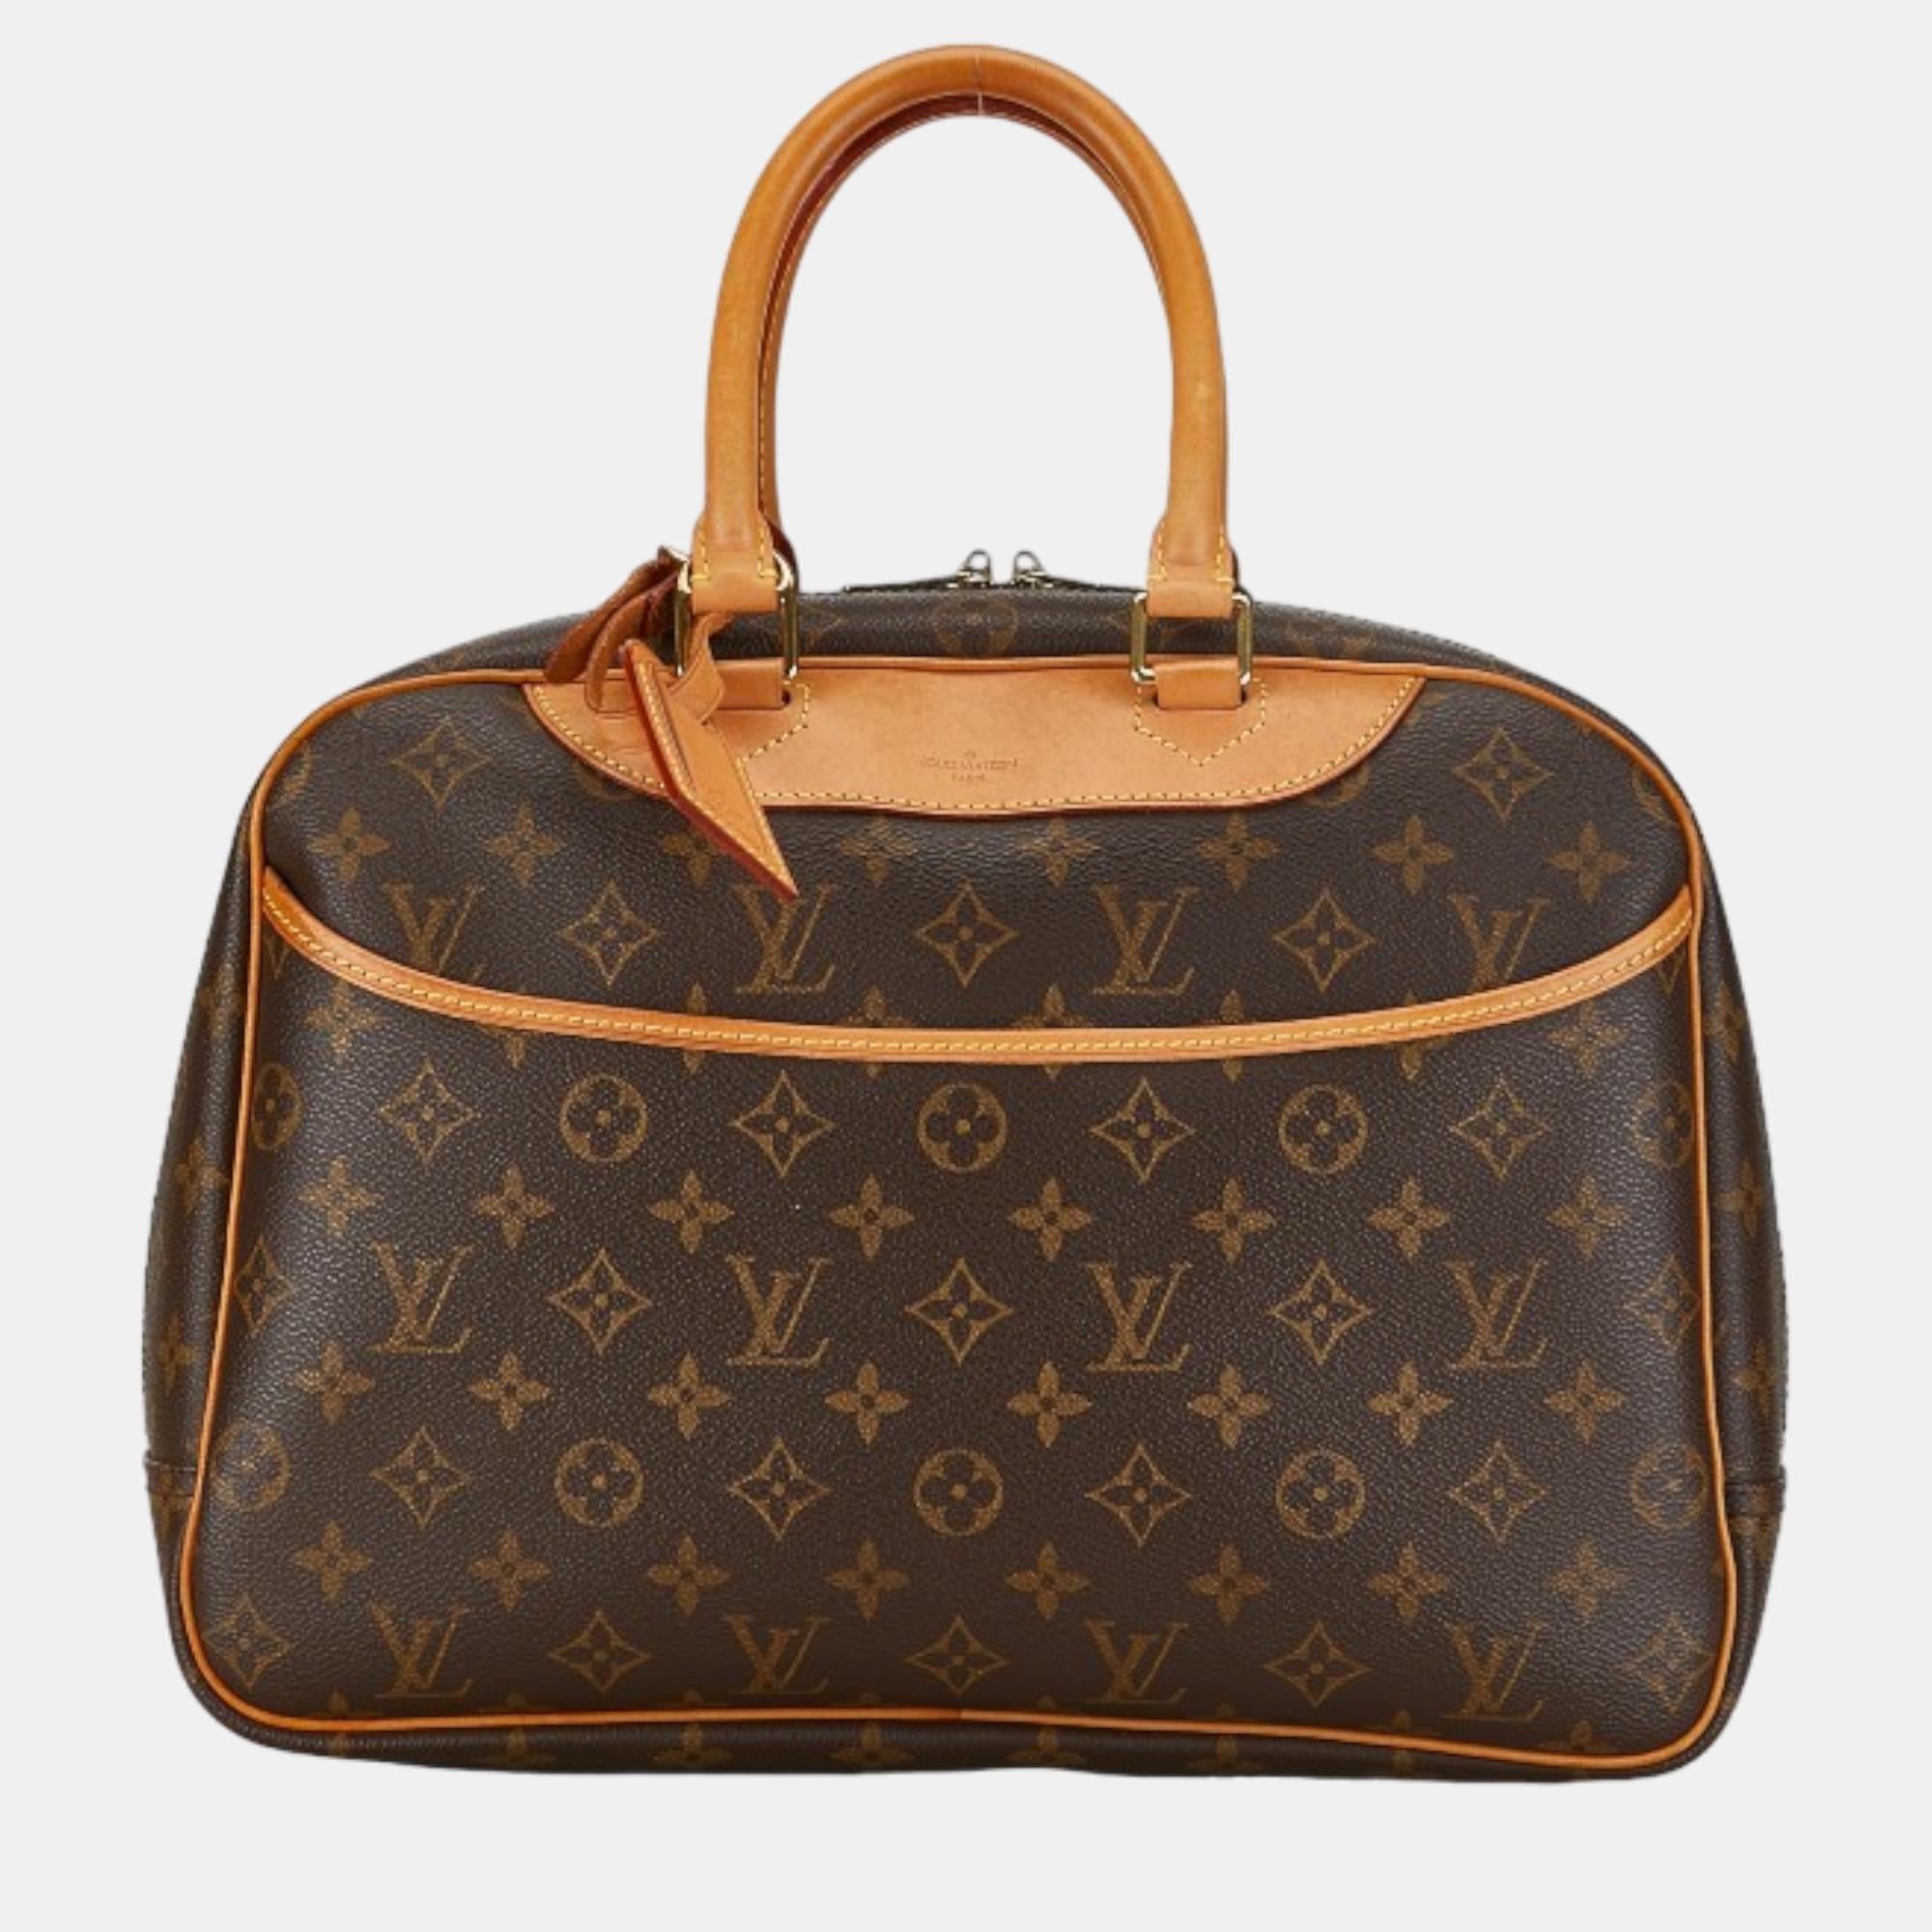 Louis vuitton brown canvas deauville handbag